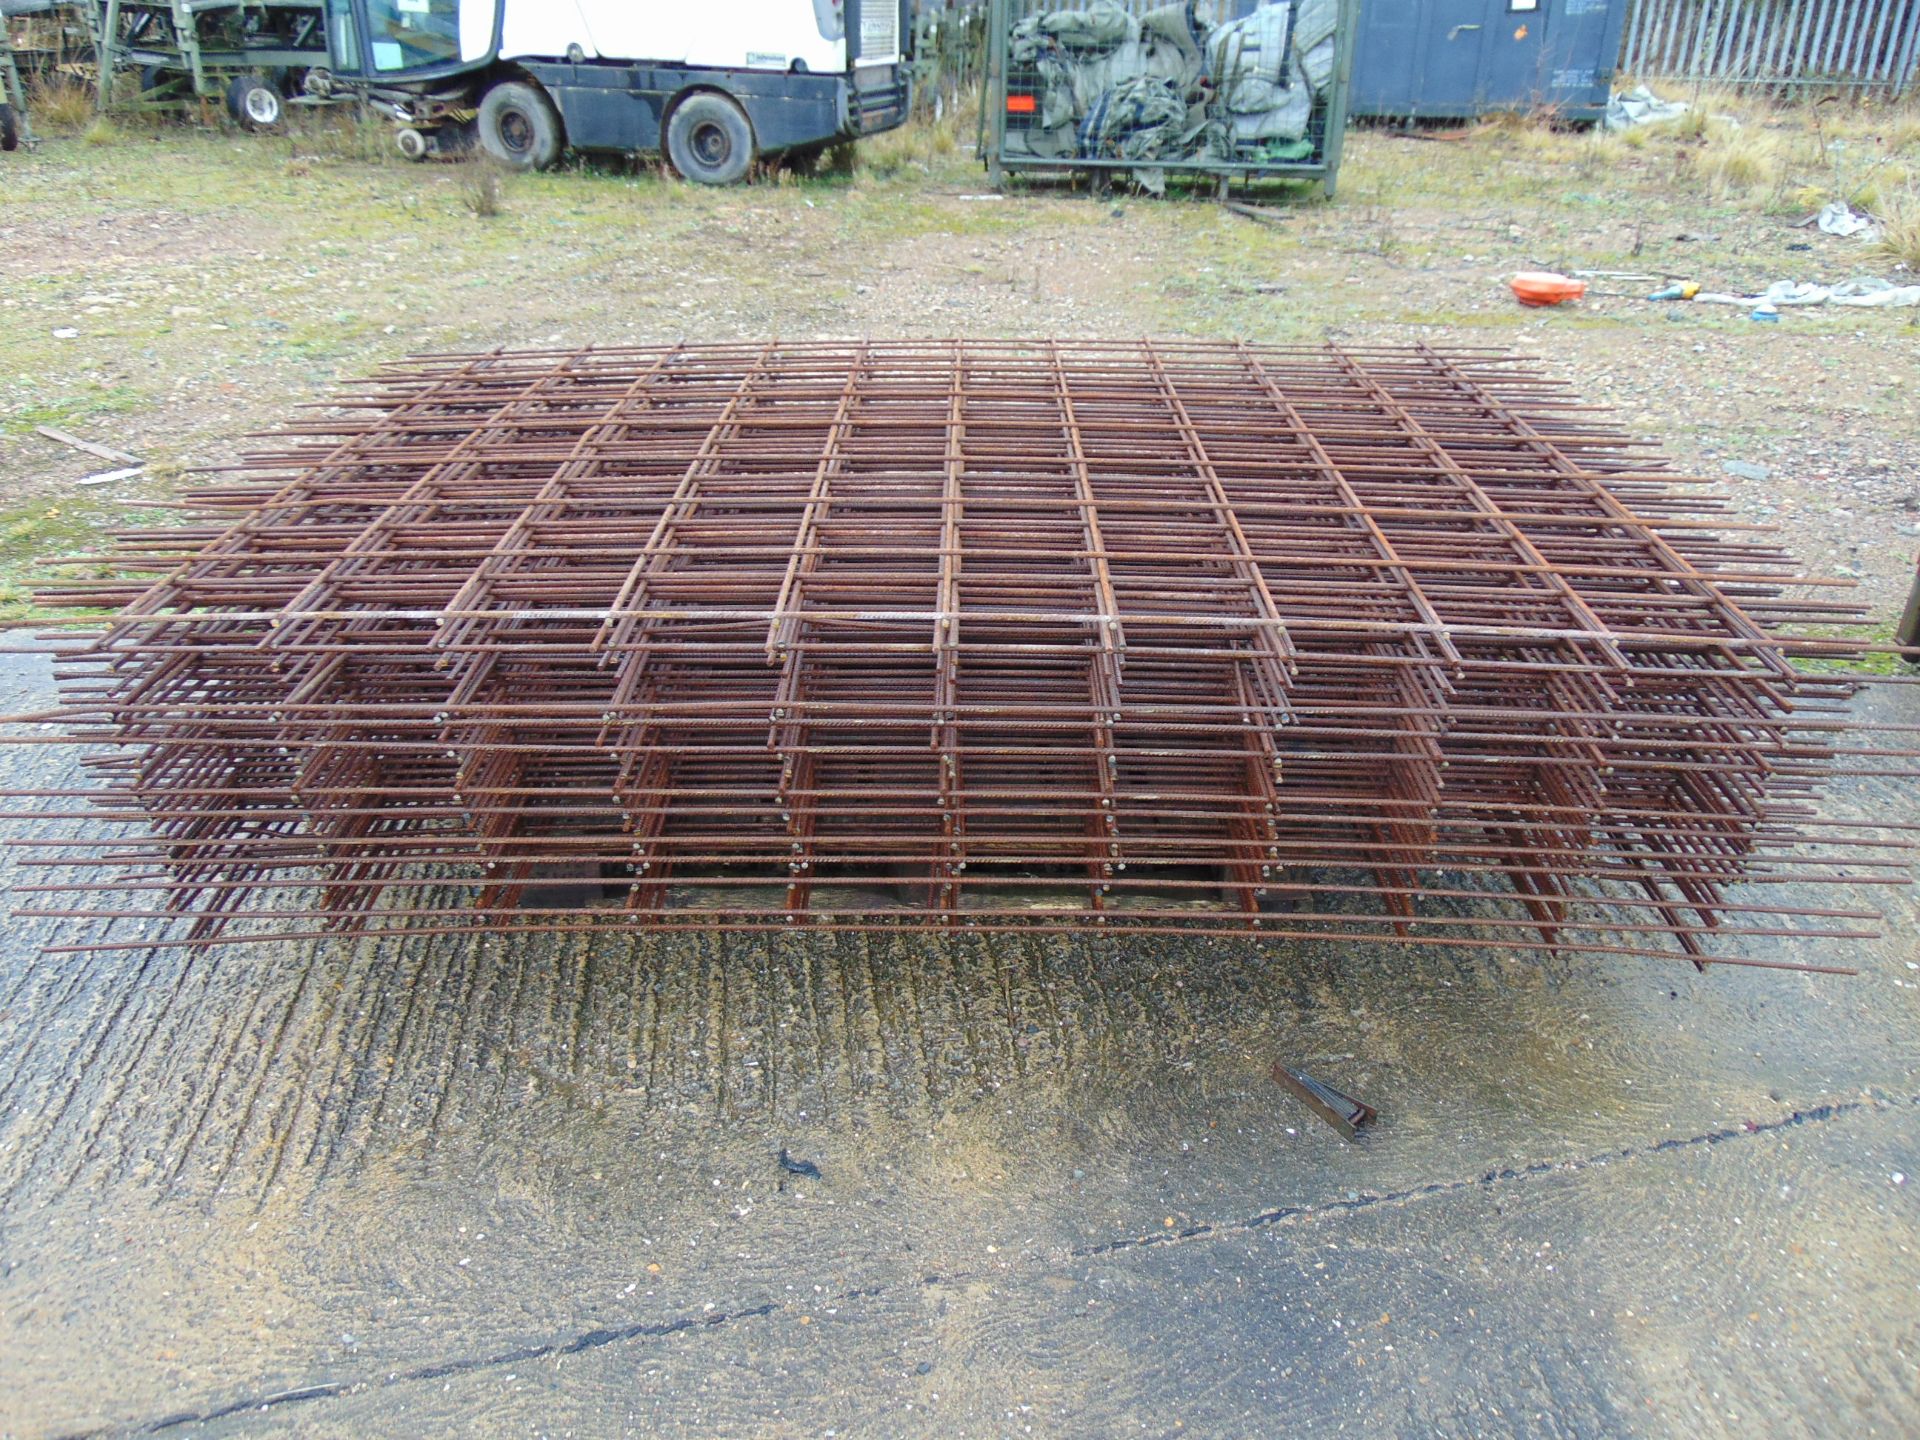 30 x Concrete Reinforcement Steel Mesh 2.4m x 1.6m 8mm Wires - Image 4 of 4